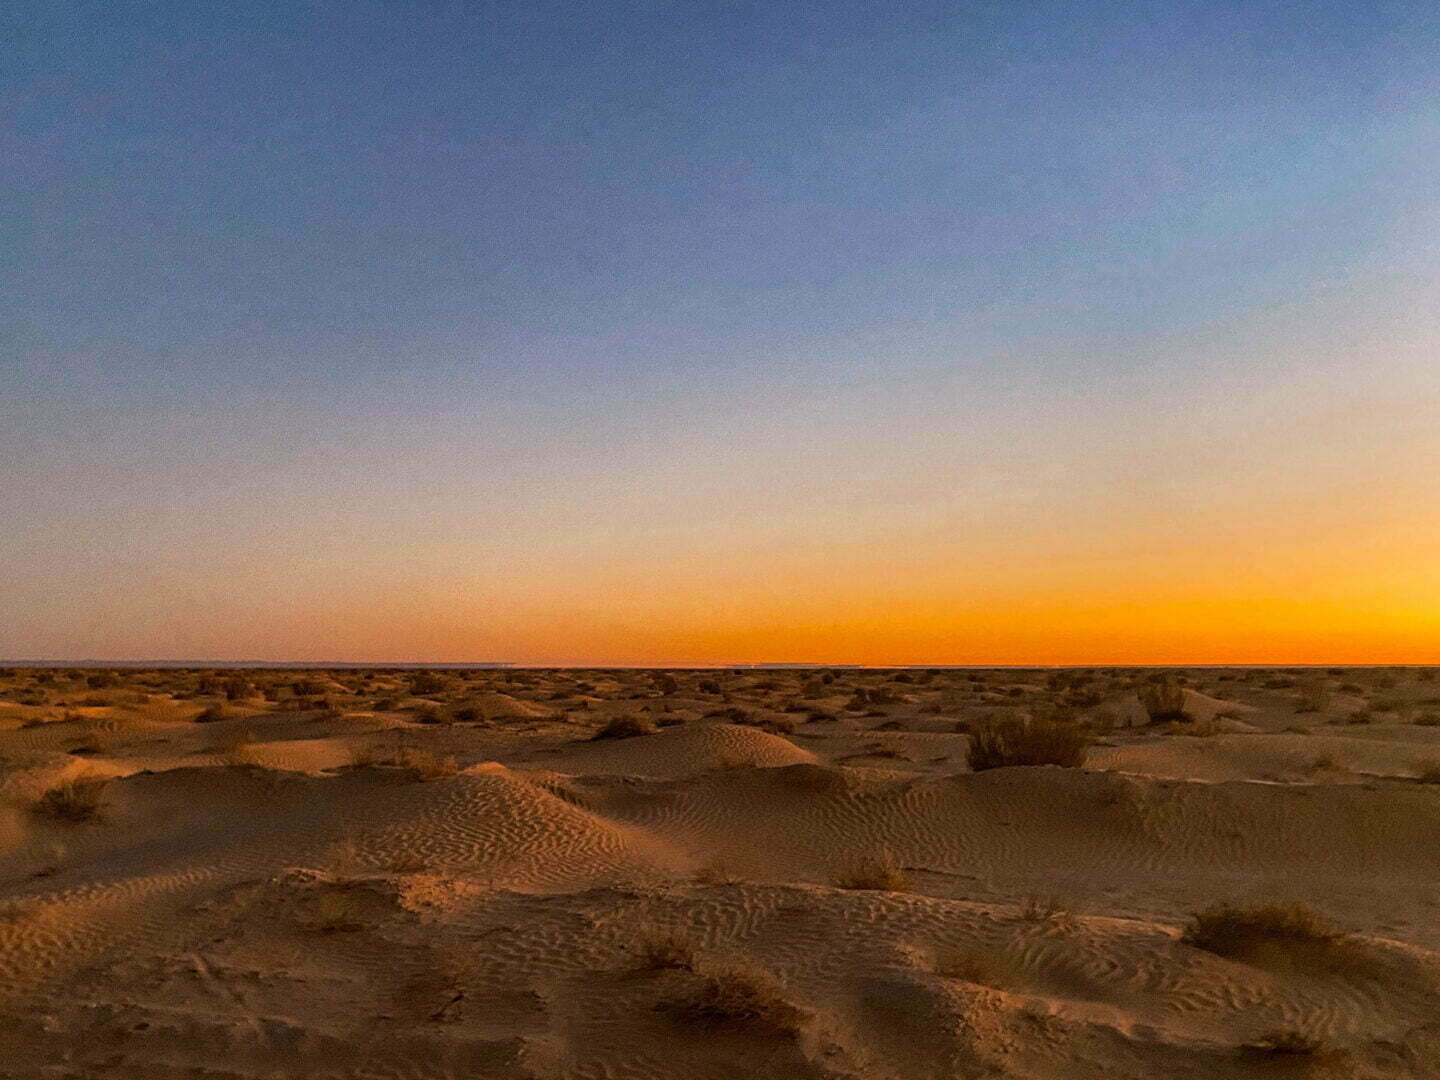 Tunisia - The Magic of the Desert